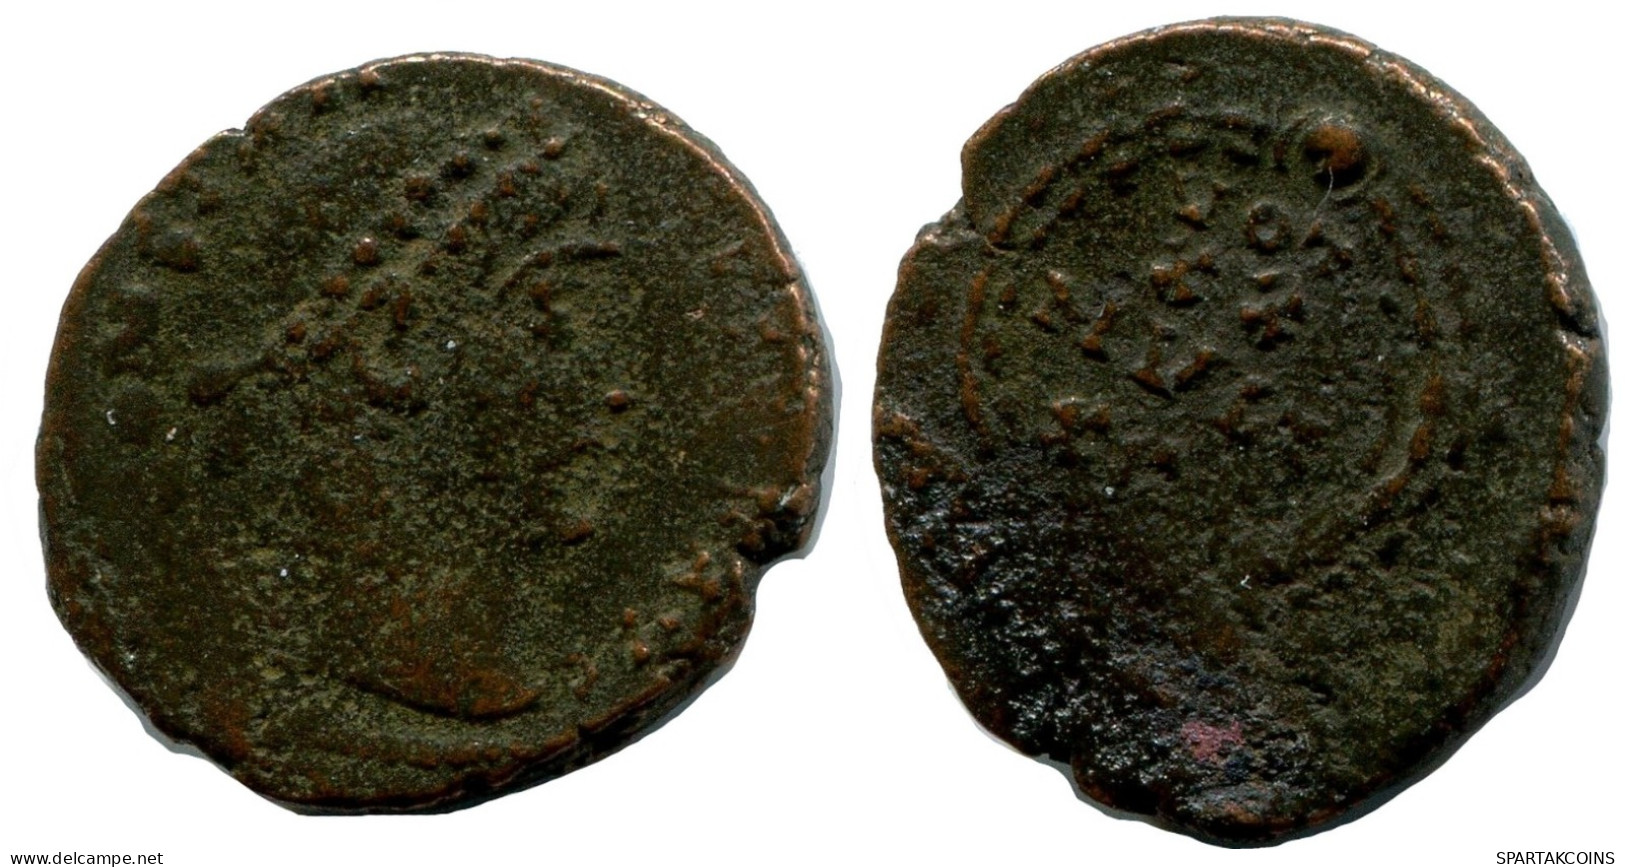 CONSTANTIUS II MINT UNCERTAIN FOUND IN IHNASYAH HOARD EGYPT #ANC10039.14.E.A - L'Empire Chrétien (307 à 363)